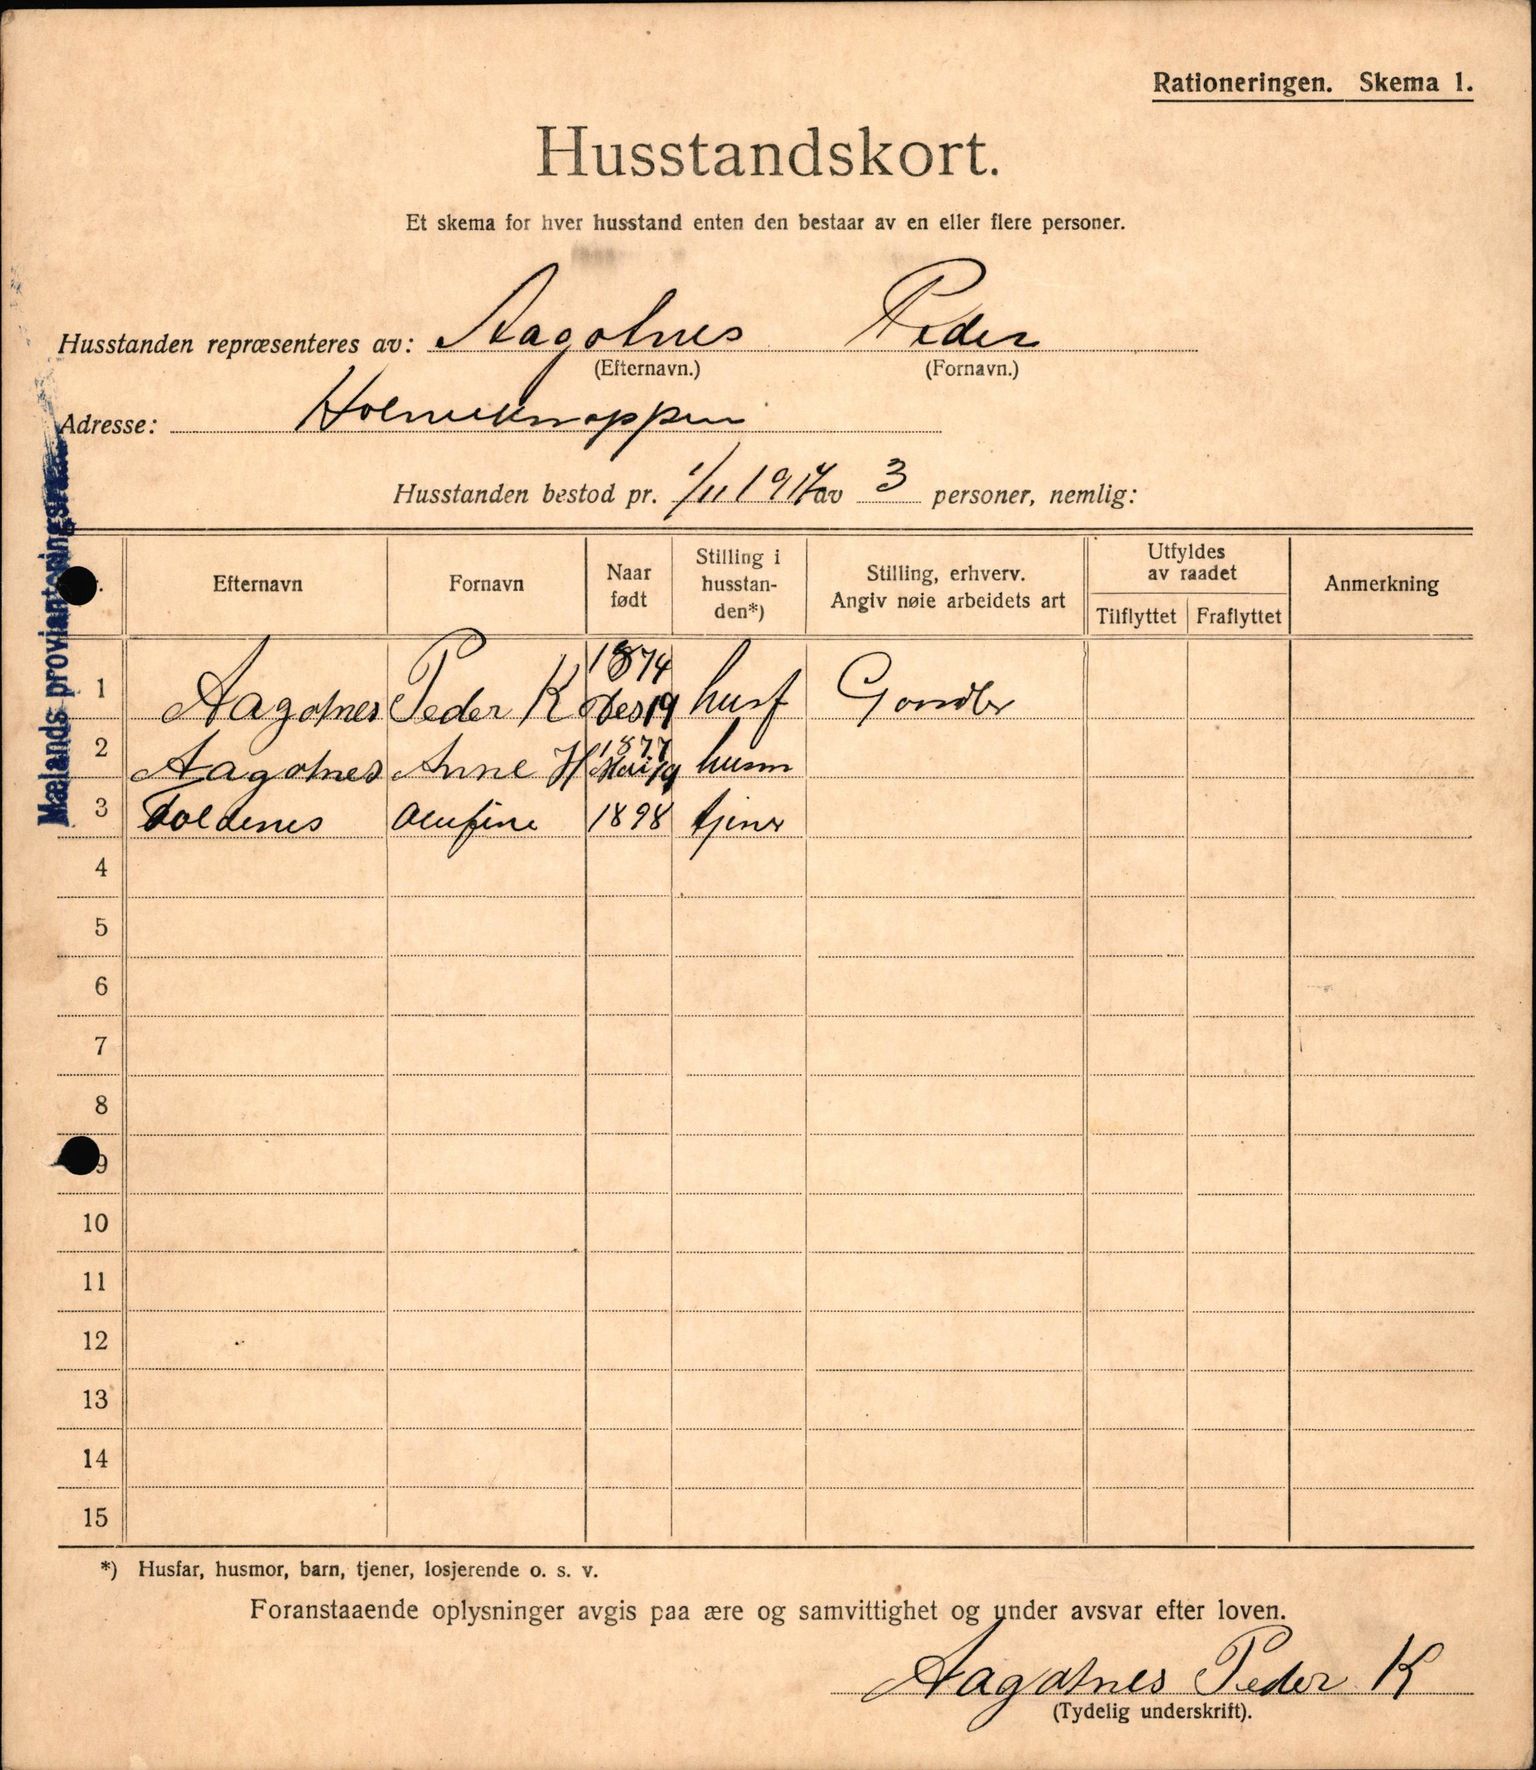 IKAH, Meland kommune, Provianteringsrådet, Husstander per 01.11.1917, 1917-1918, s. 85